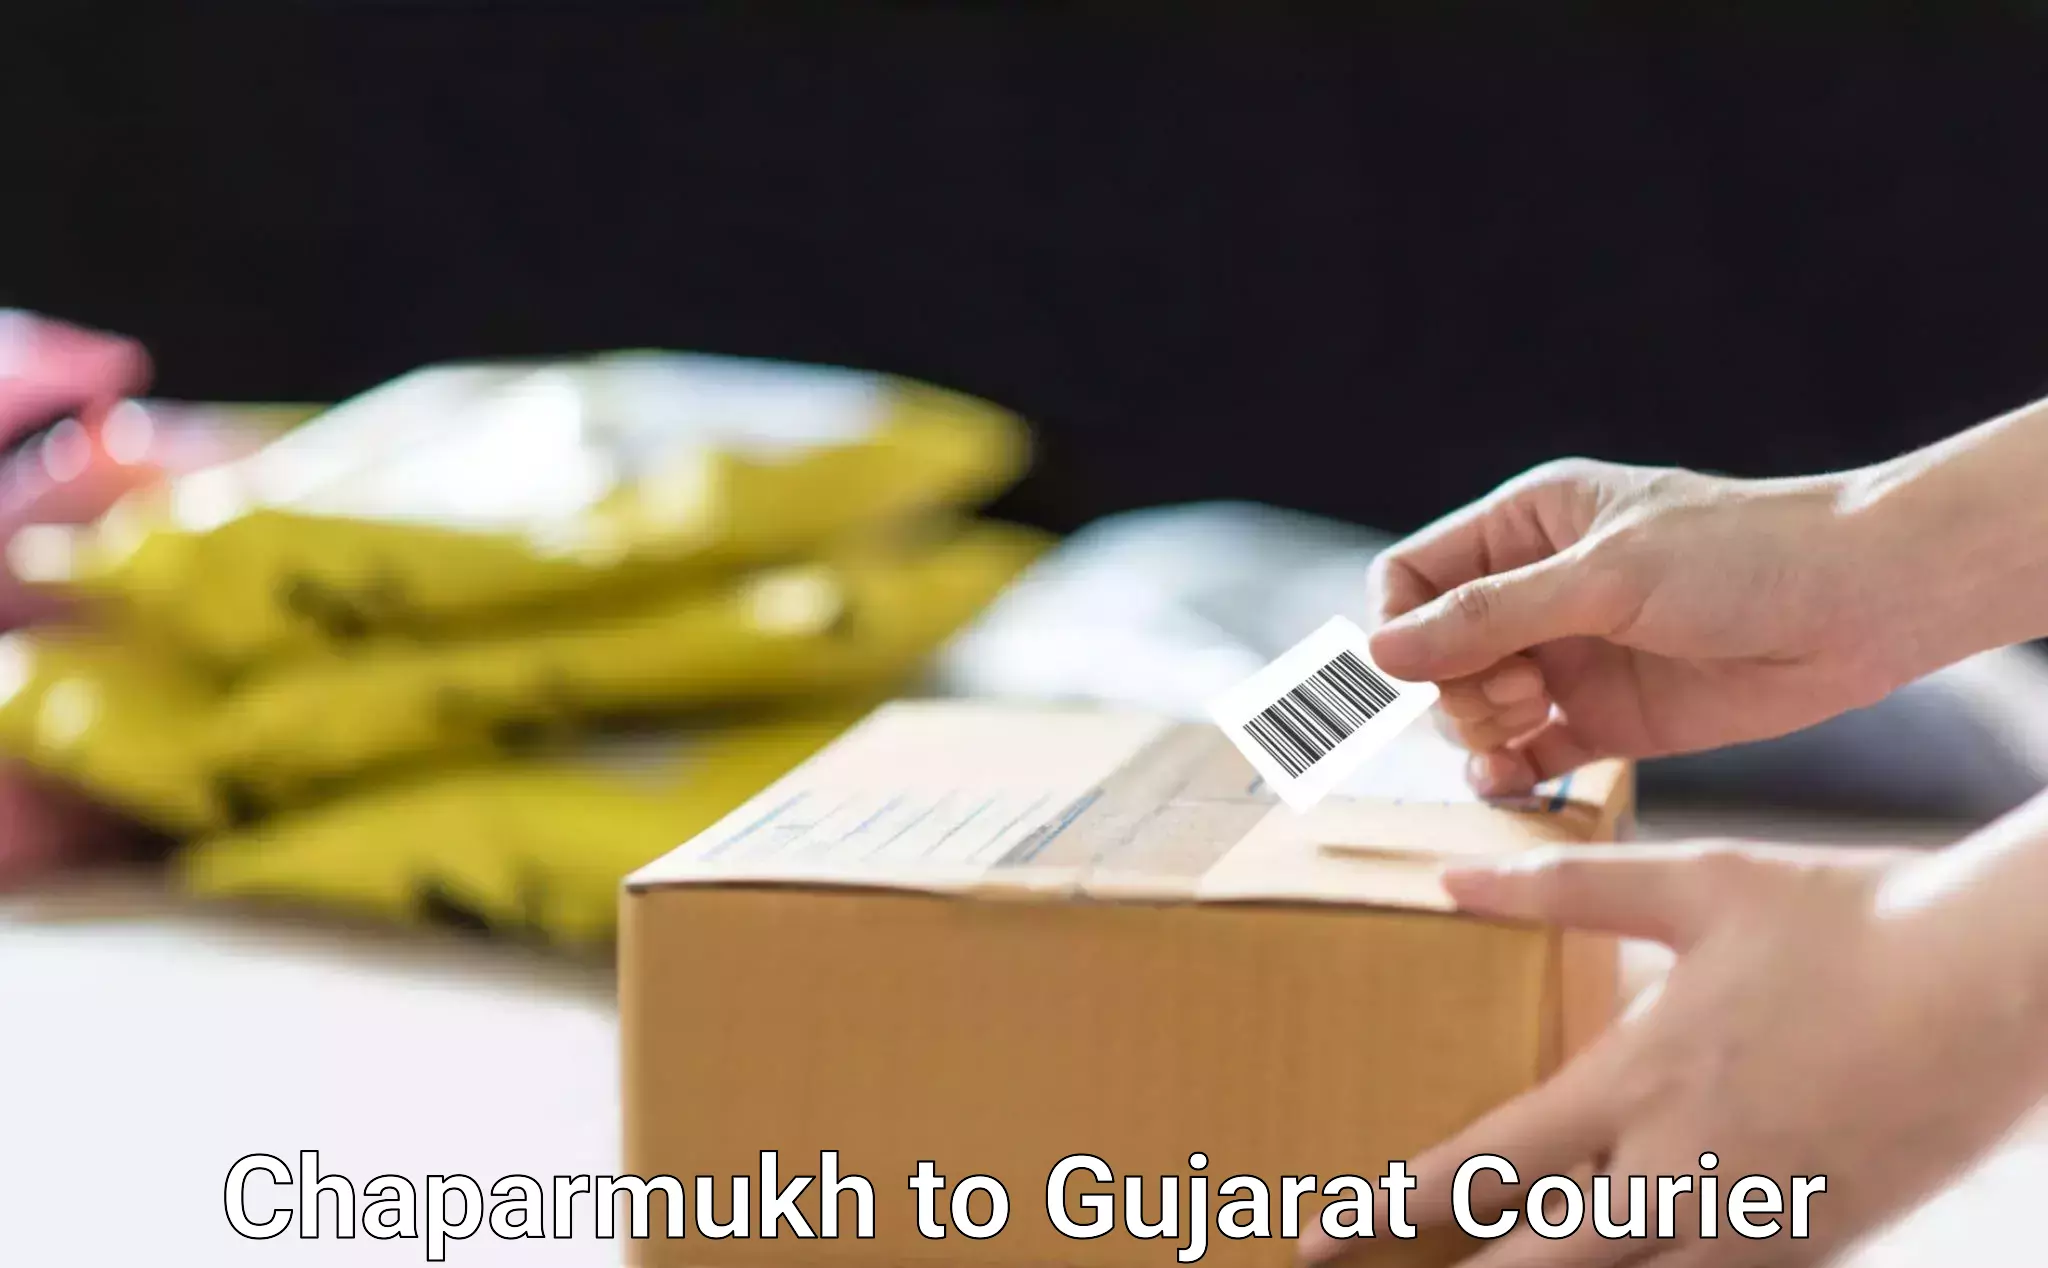 Fast parcel dispatch Chaparmukh to Gujarat